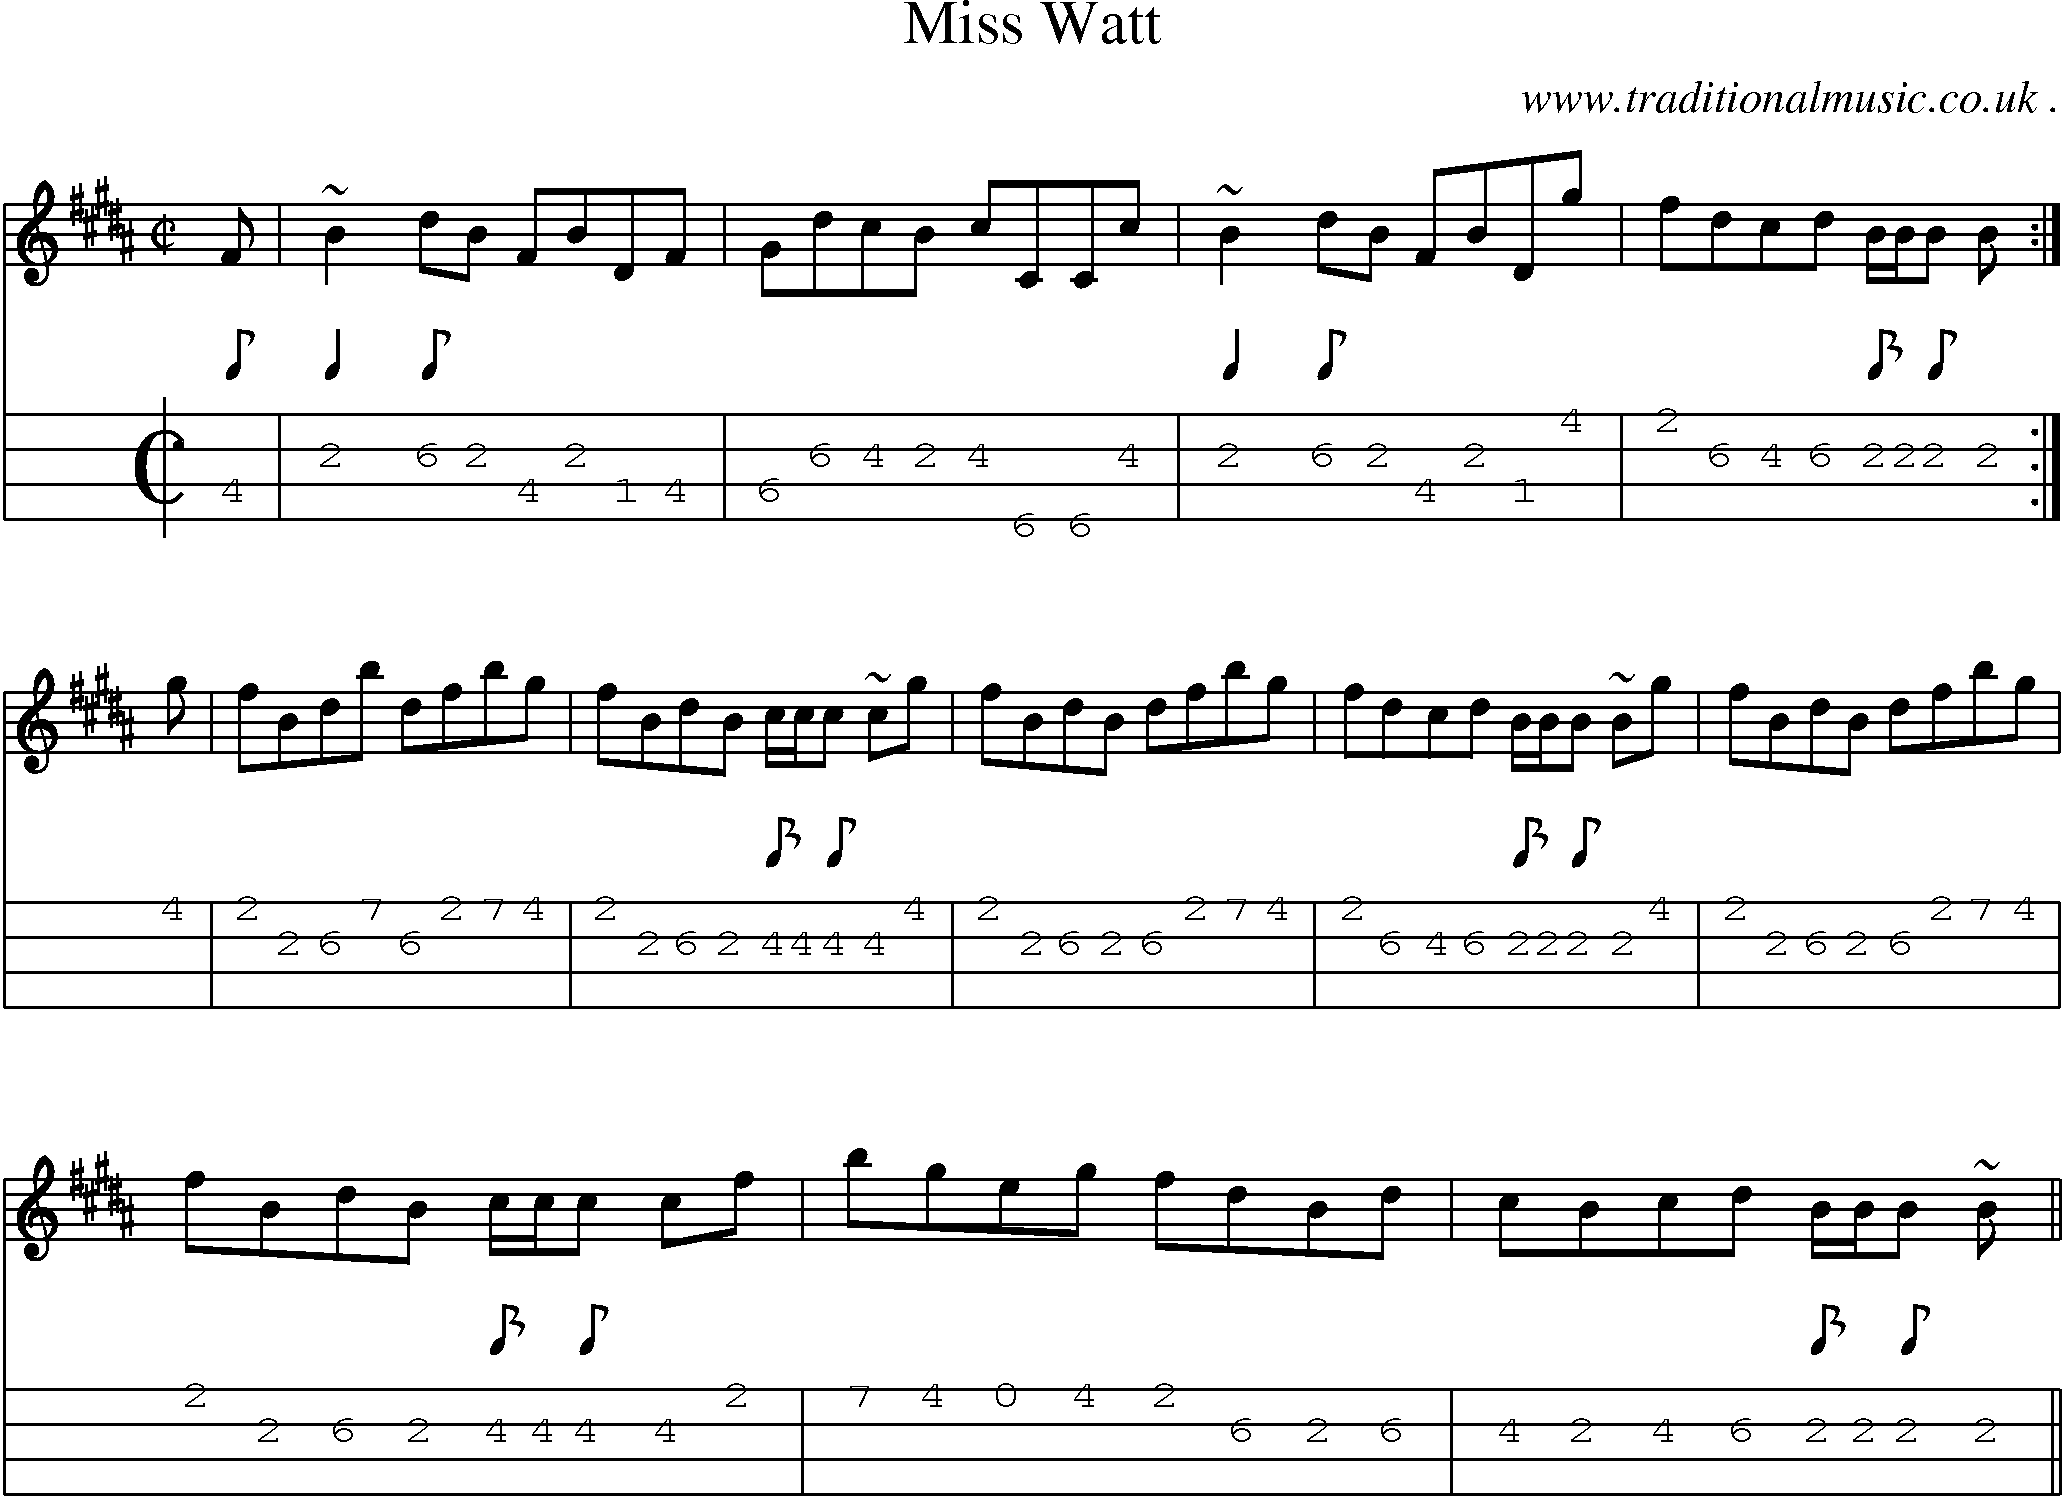 Sheet-music  score, Chords and Mandolin Tabs for Miss Watt